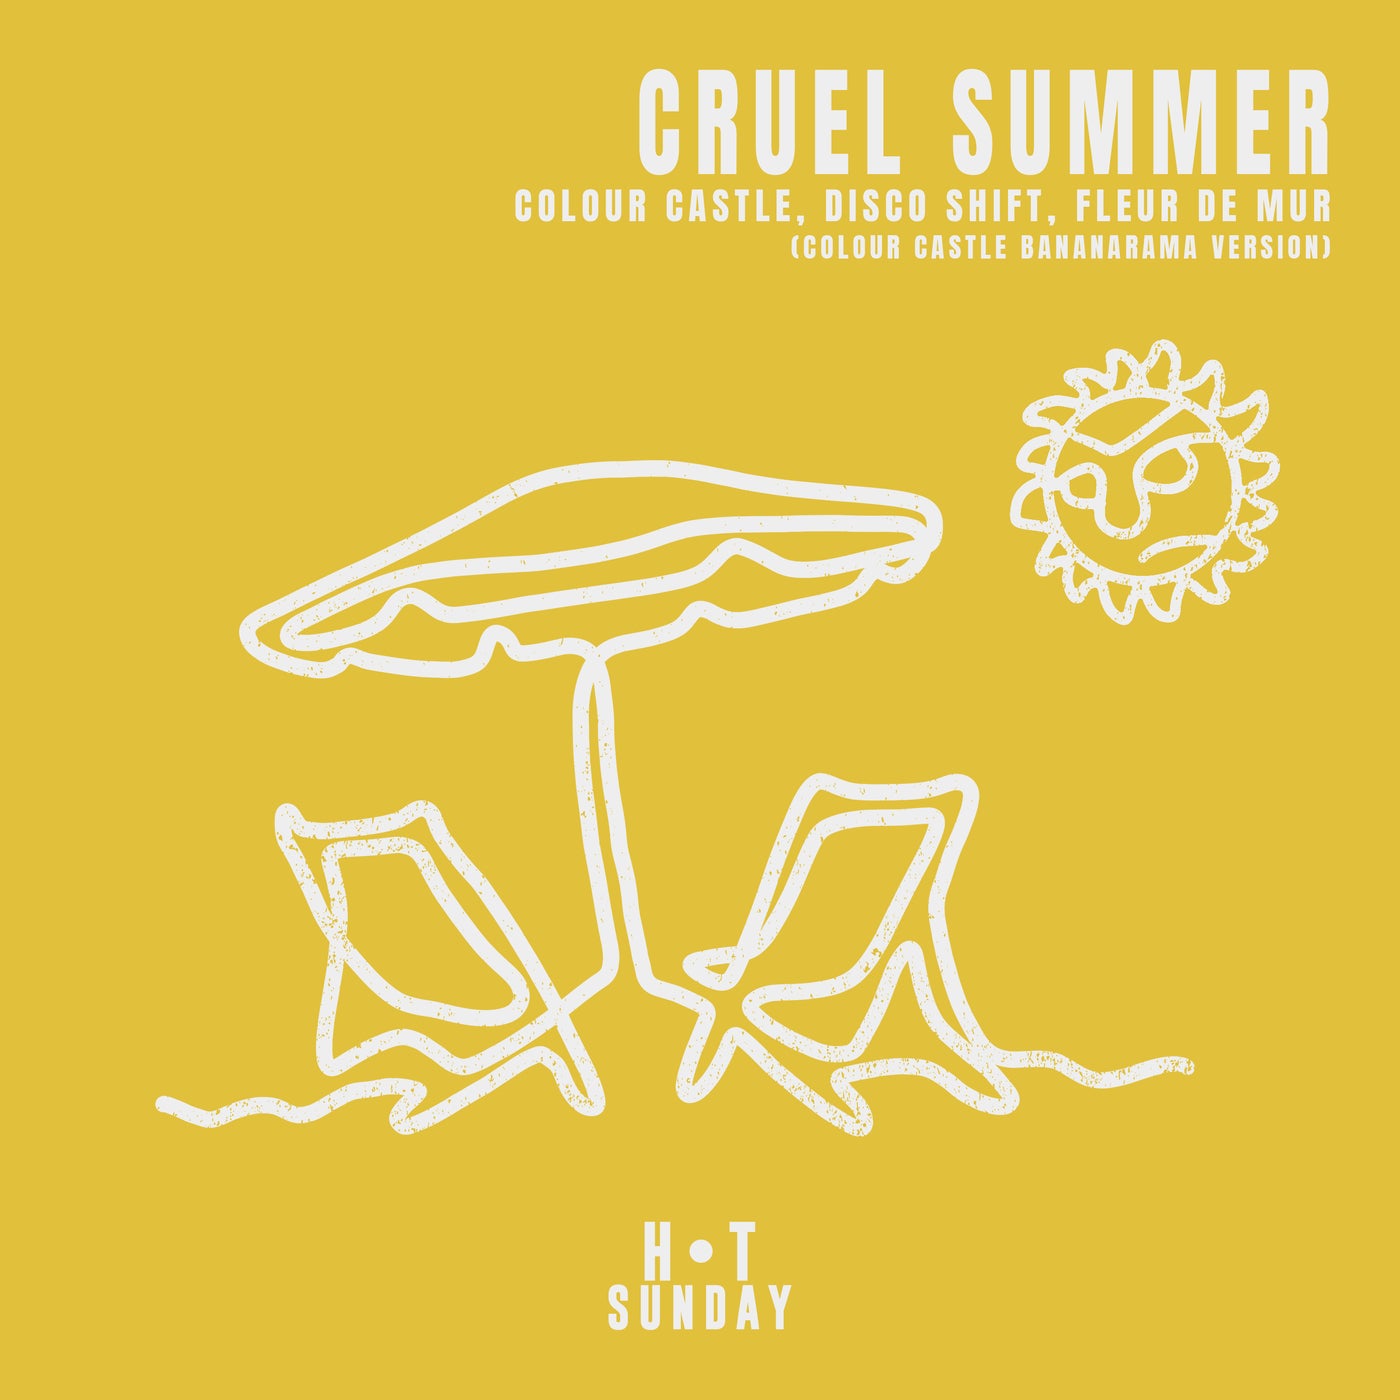 Cruel Summer (Colour Castles Bananarama Extended Version)